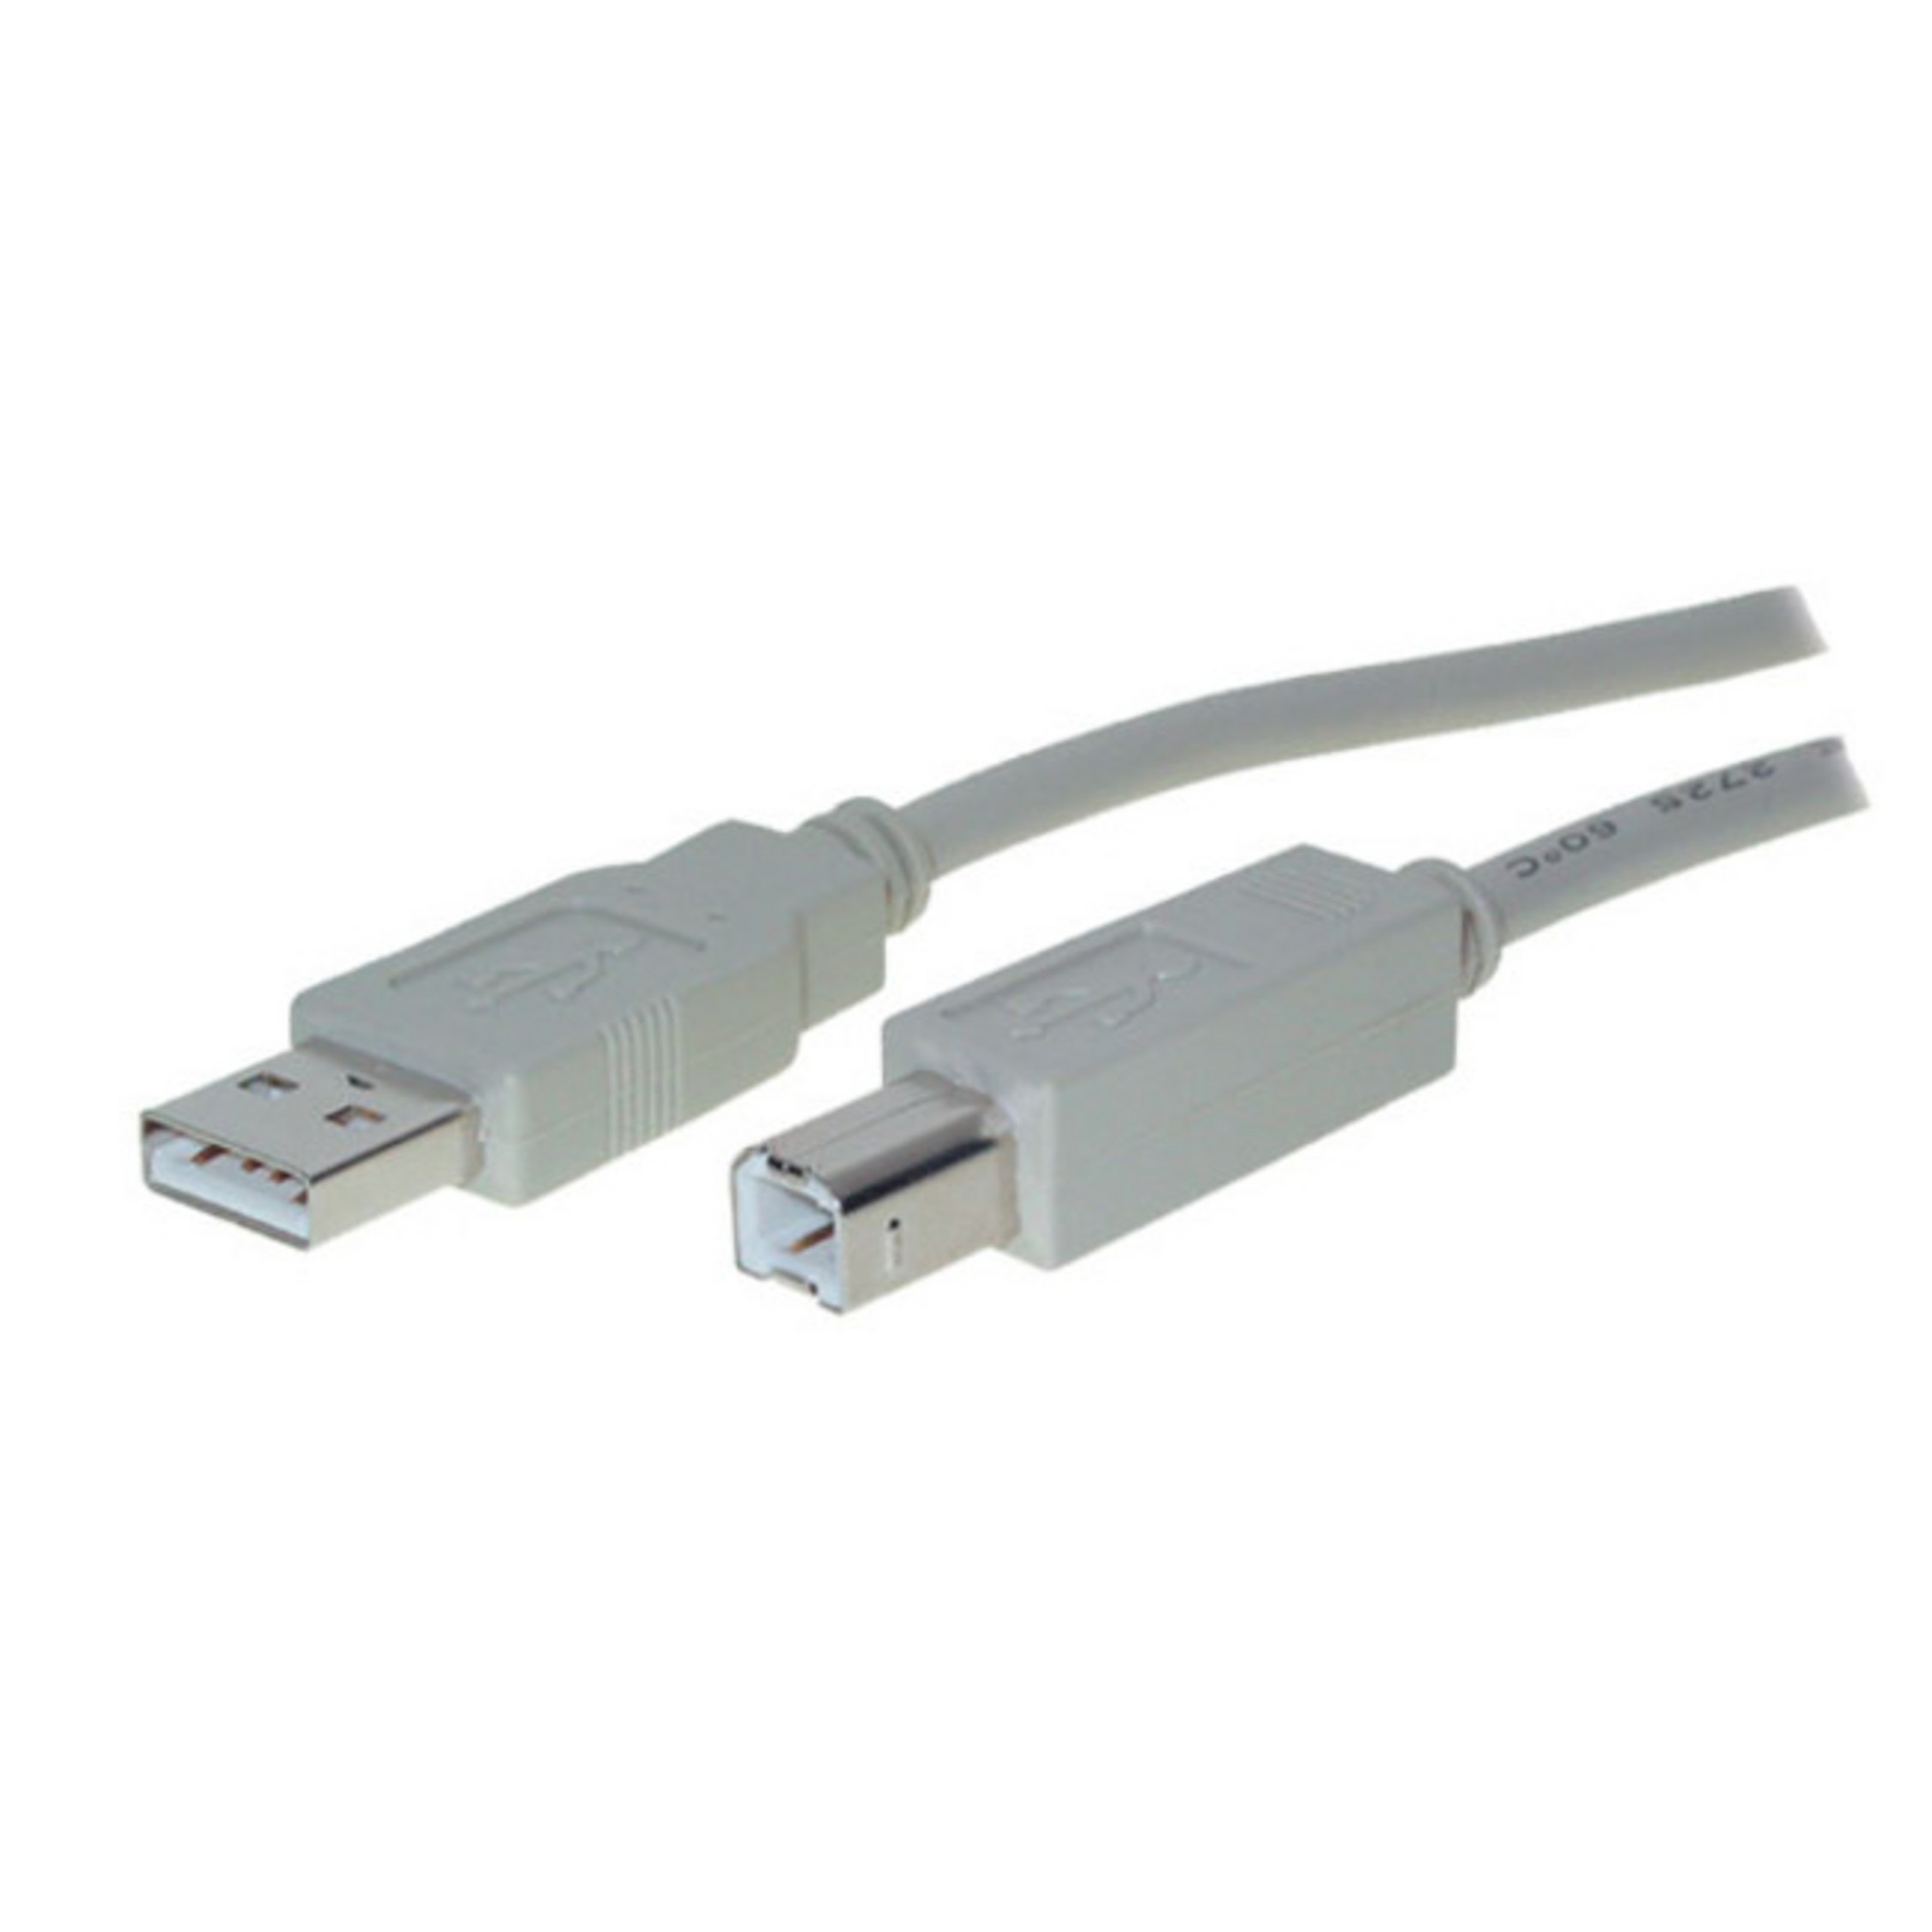 S/CONN MAXIMUM Stecker A USB / B Kabel USB 2.0 0,5m Stecker USB CONNECTIVITY Kabel